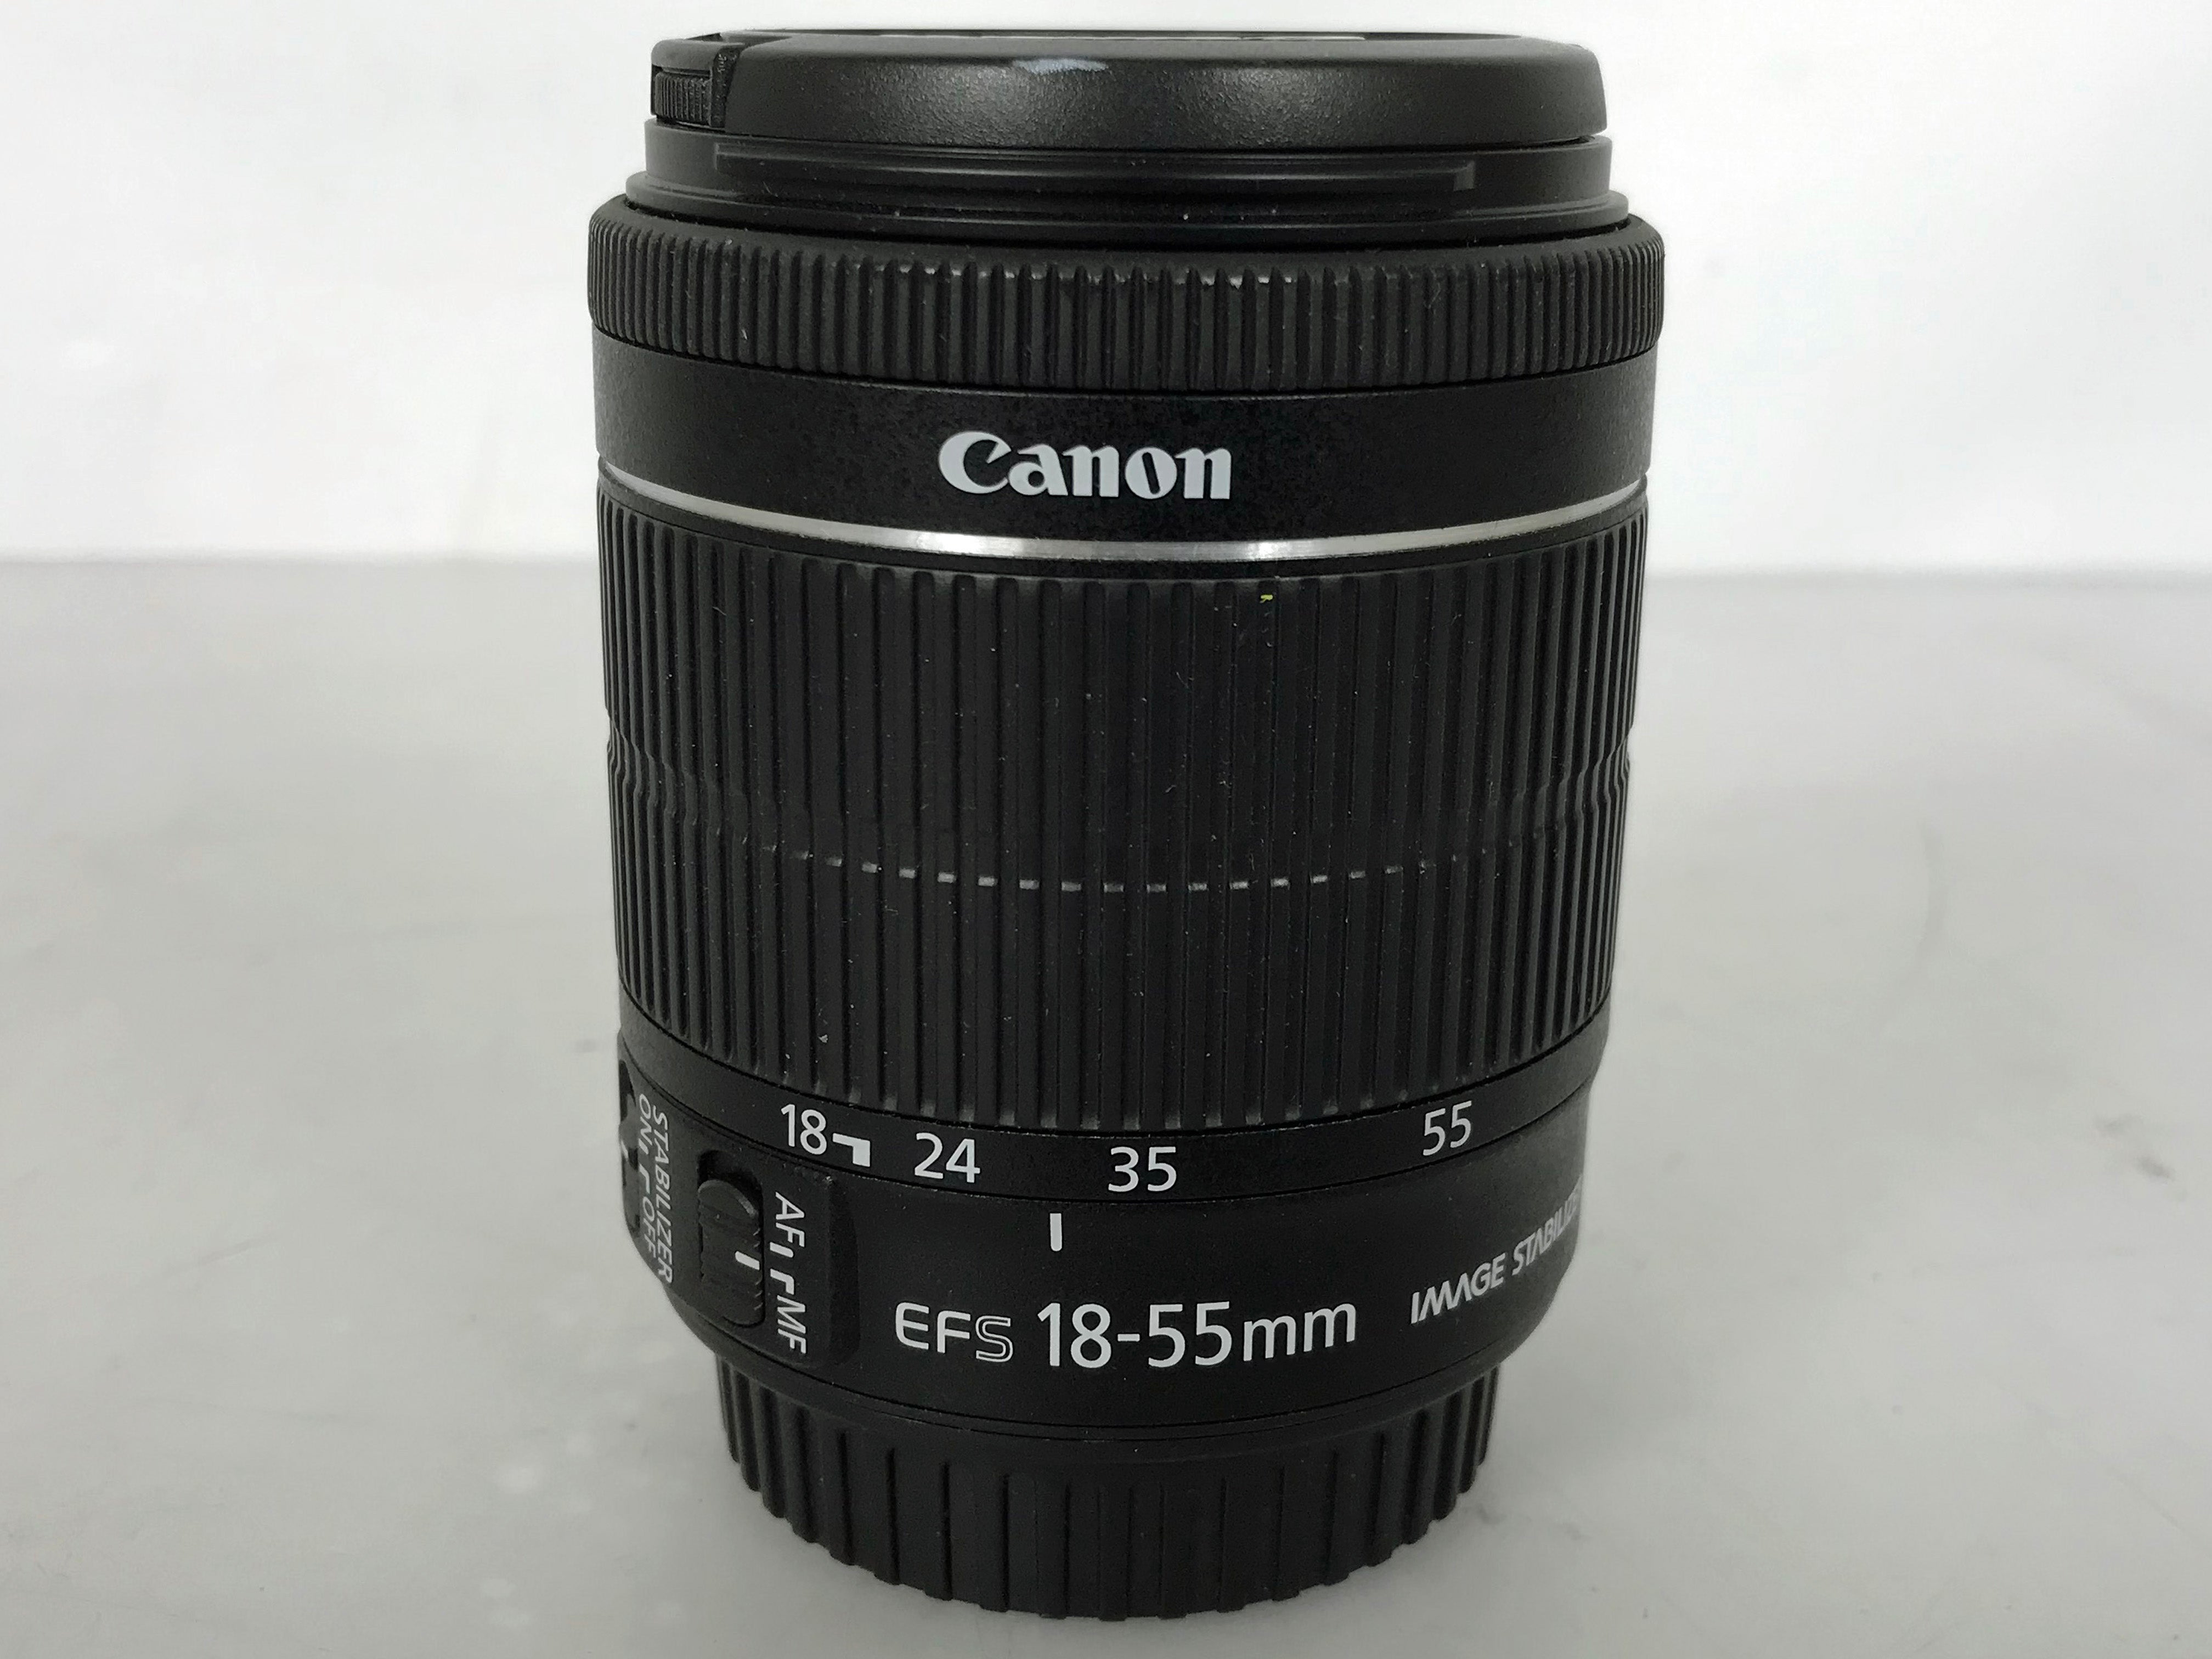 Canon EF-S 18-55mm f/3.5-5.6 IS STM Lens